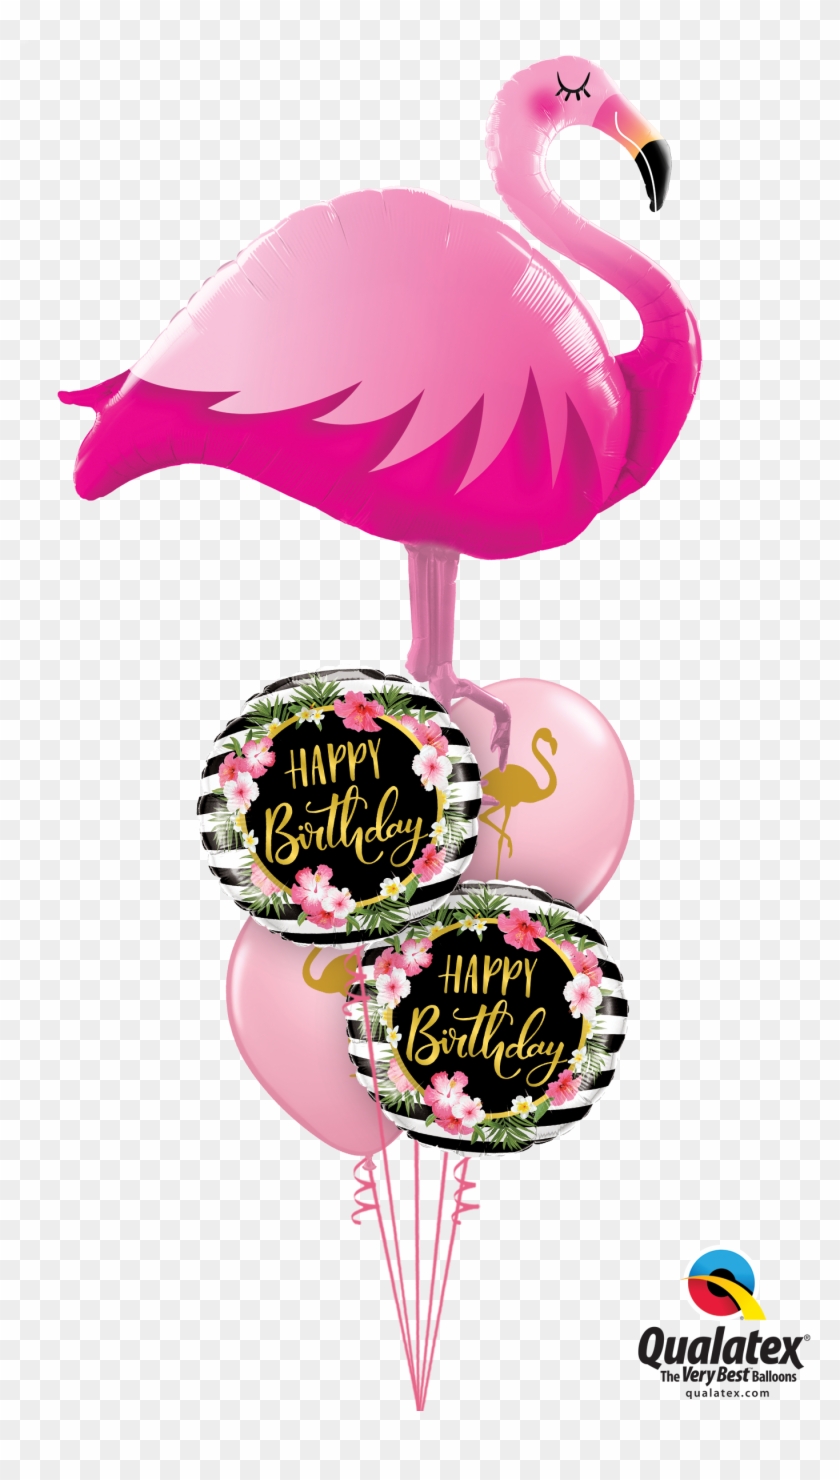 Classic Birthday Flamingo Balloon Bouquet - Classic Birthday Flamingo Balloon Bouquet #1492213